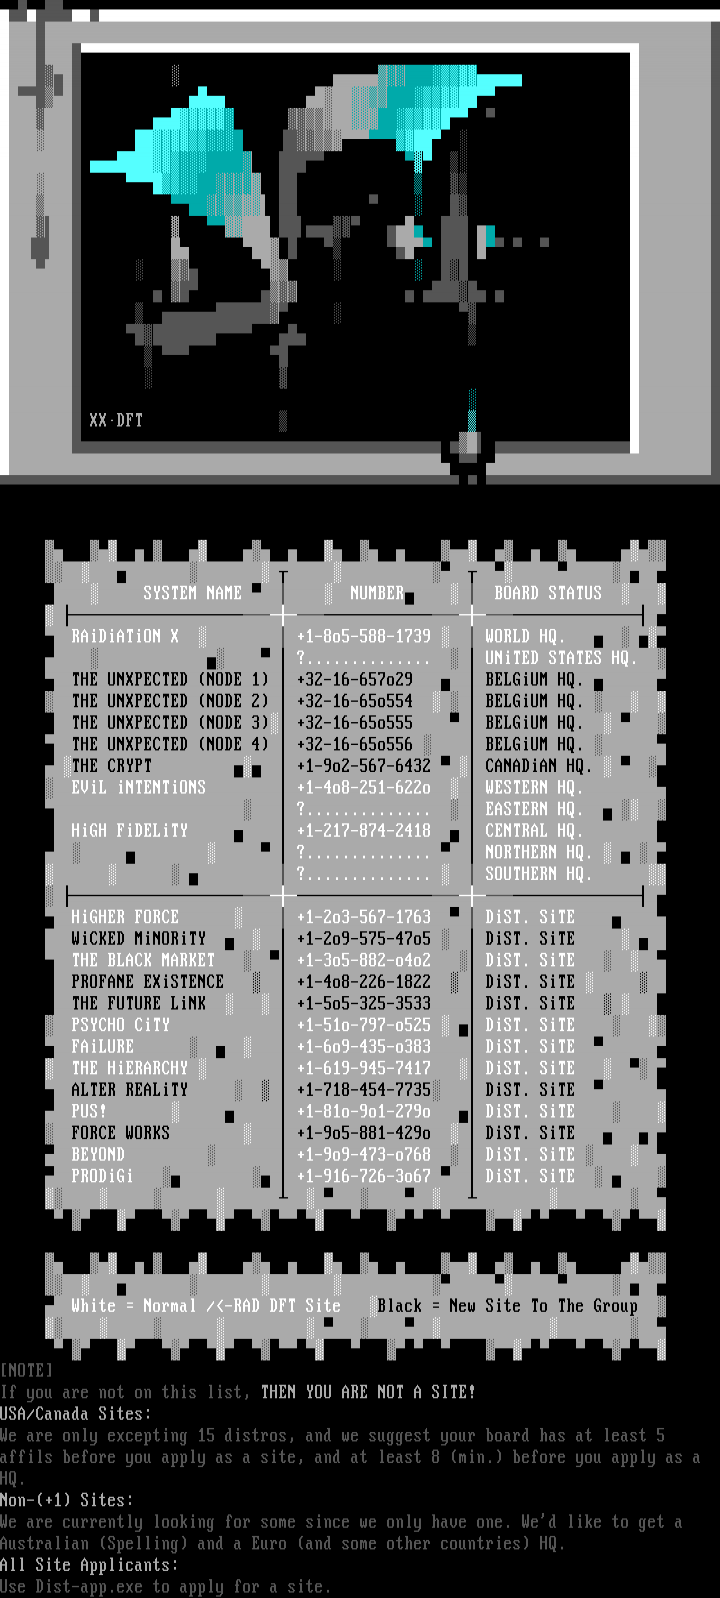 BBS List For 03/95 by Death addeR